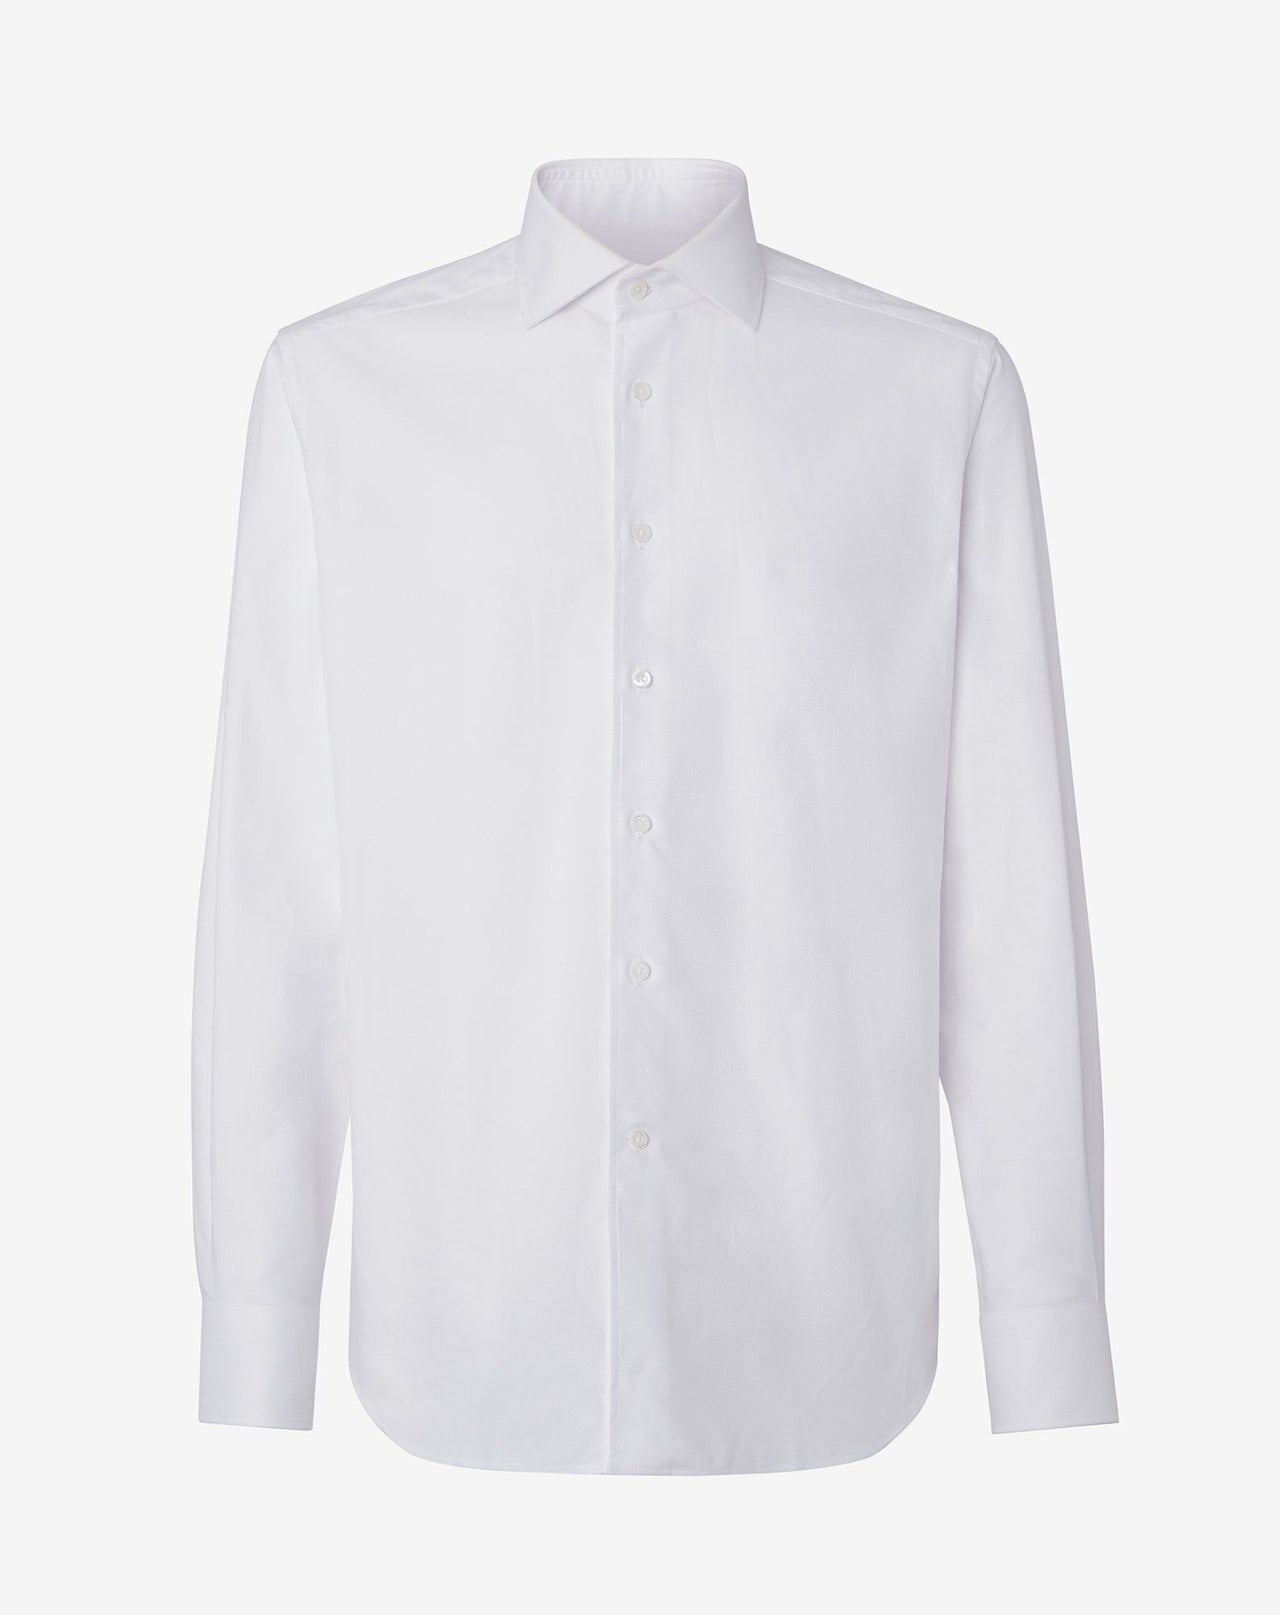 CORNELIANI Cotton Oxford Long Sleeve Shirt WHITE